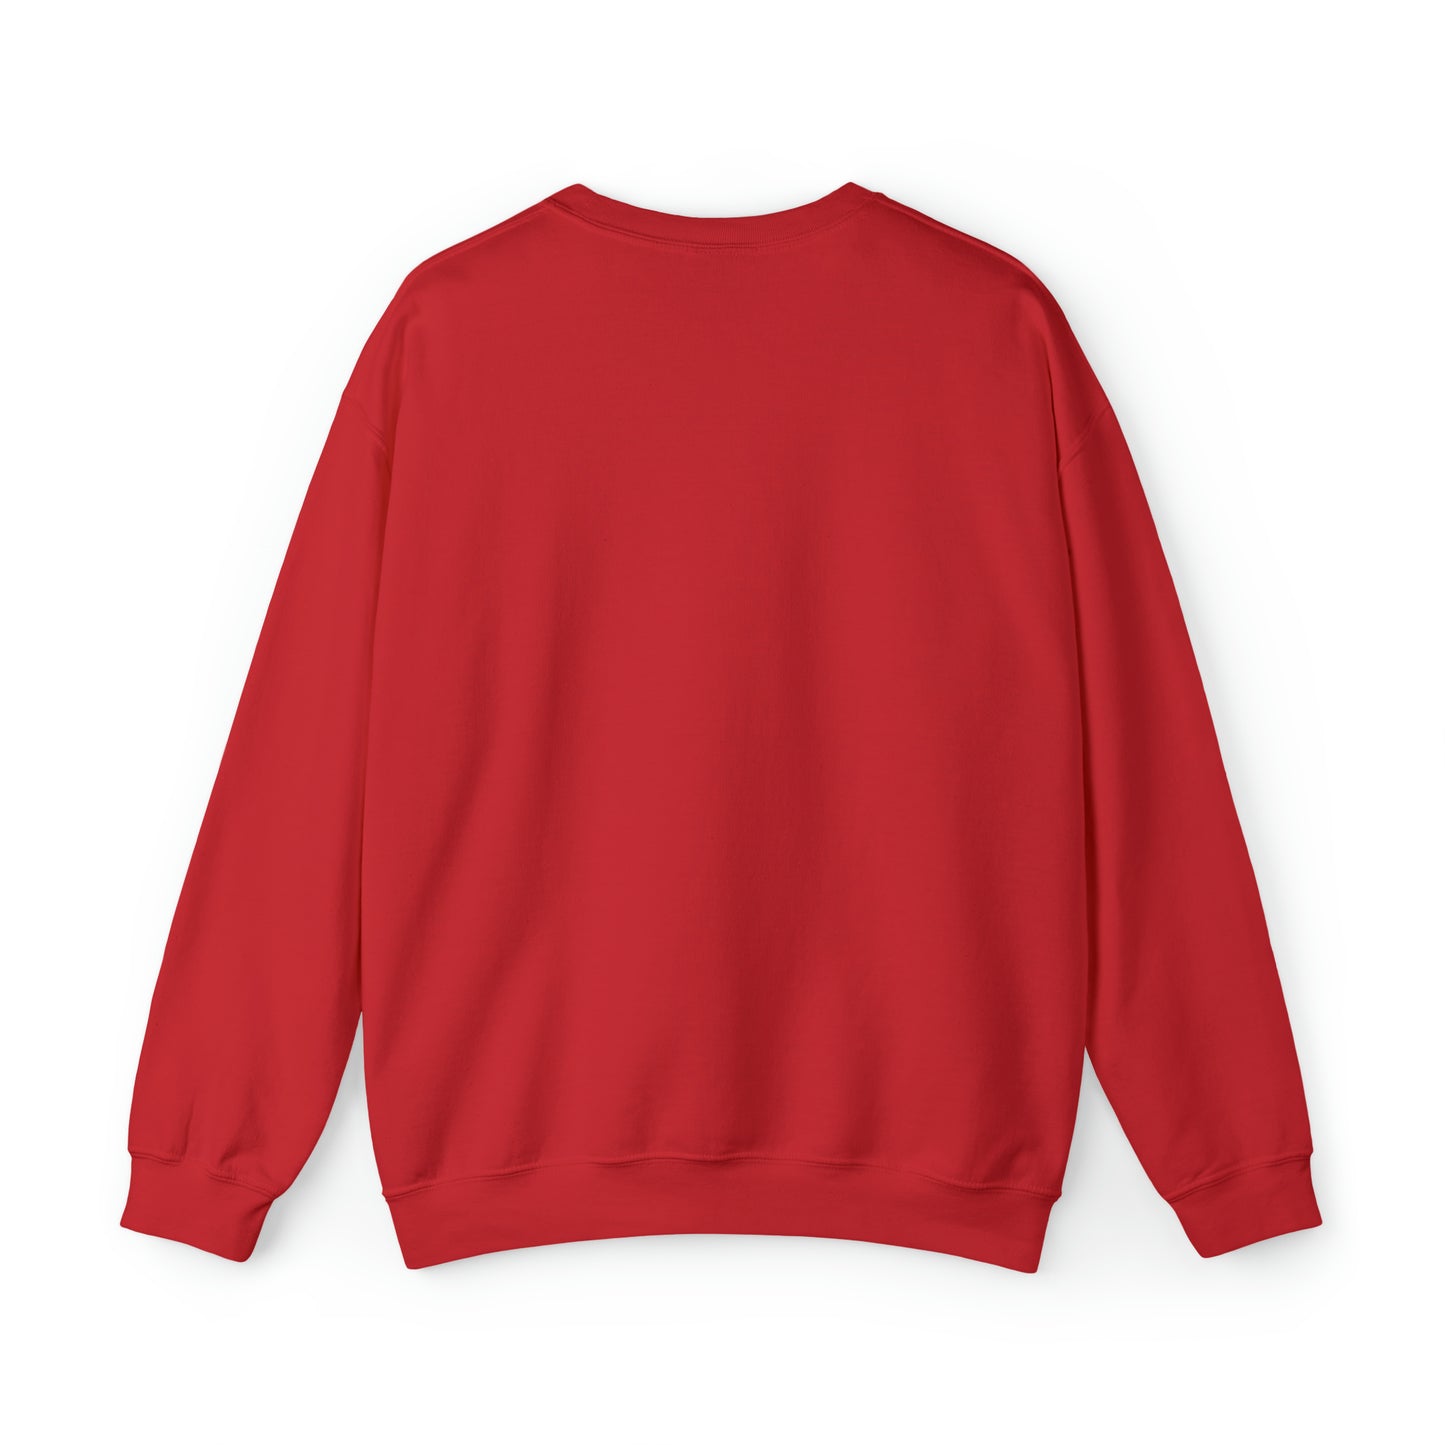 MERRY ELFIN' CHRISTMAS Unisex Heavy Blend™ Crewneck Sweatshirt